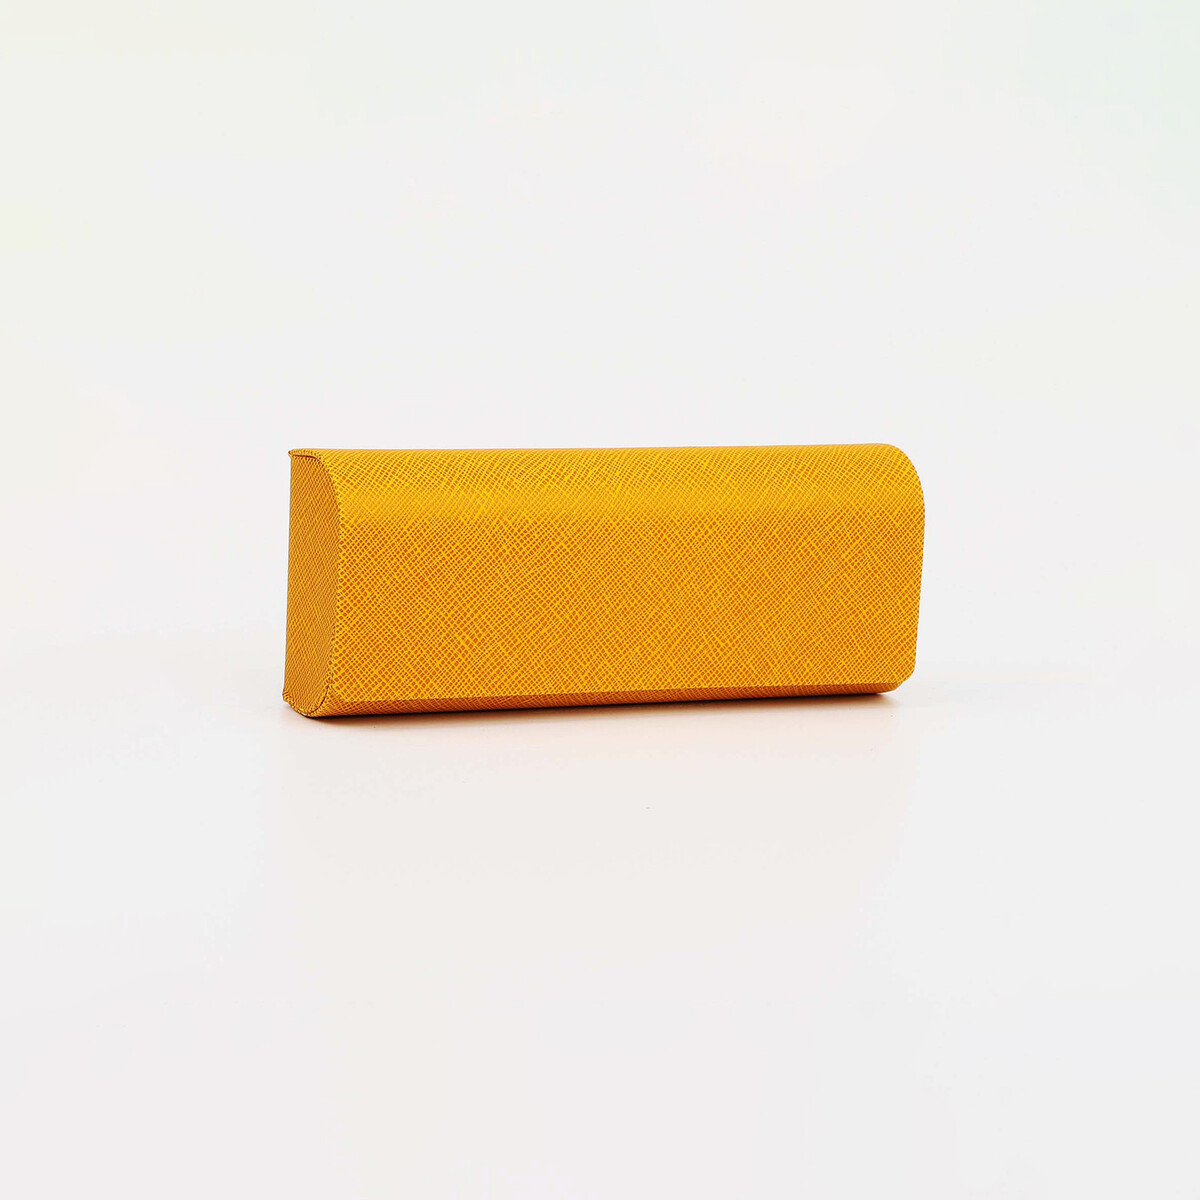 Футляр для очков на магните, 15.5 см х 3 см х 6 см, салфетка, цвет желтый футляр для очков на магните 15 5 см х 3 см х 6 см салфетка желтый